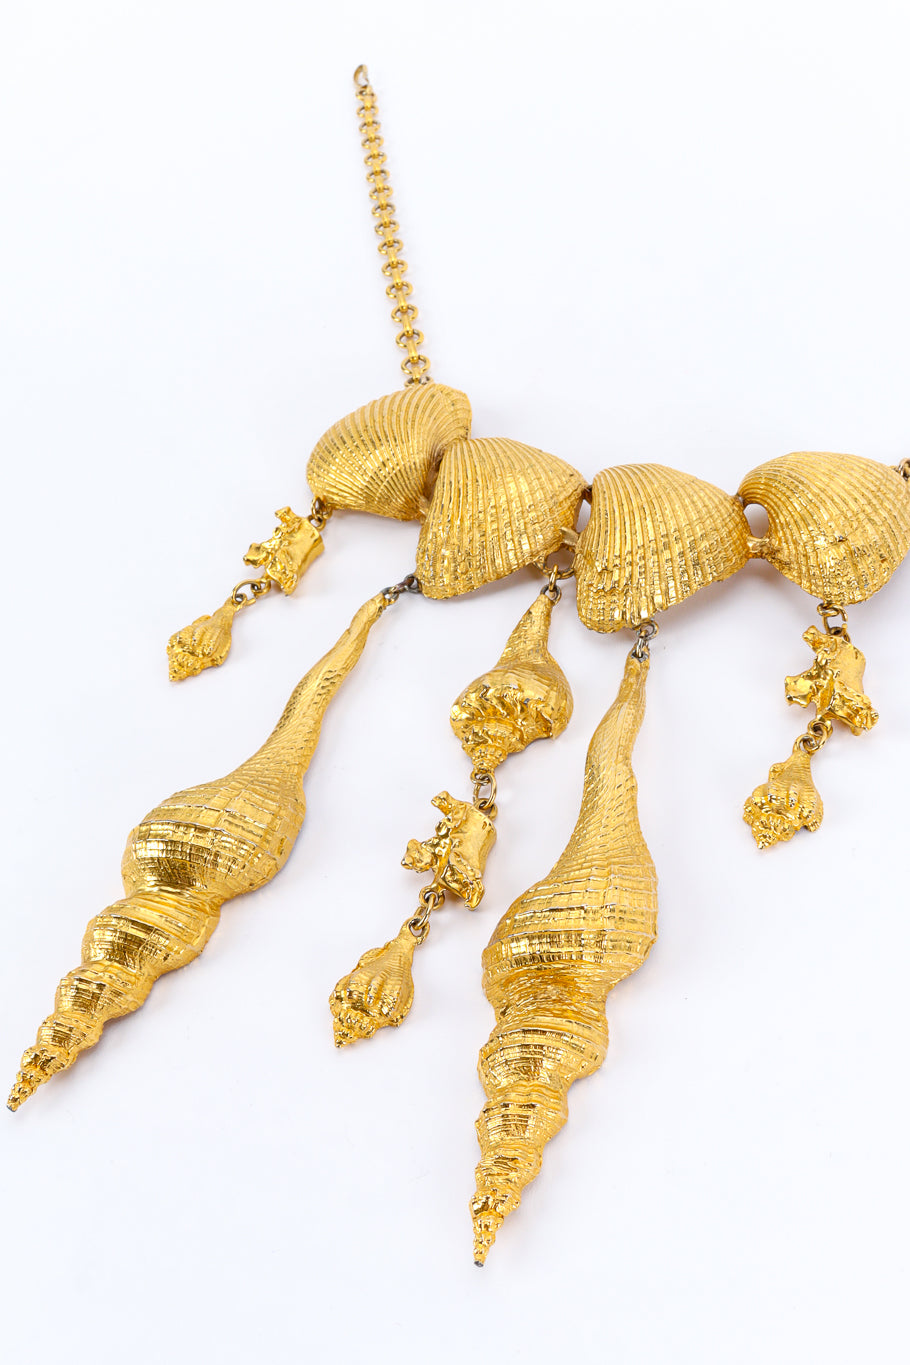 Scallop & Conch Shell Pendant Necklace